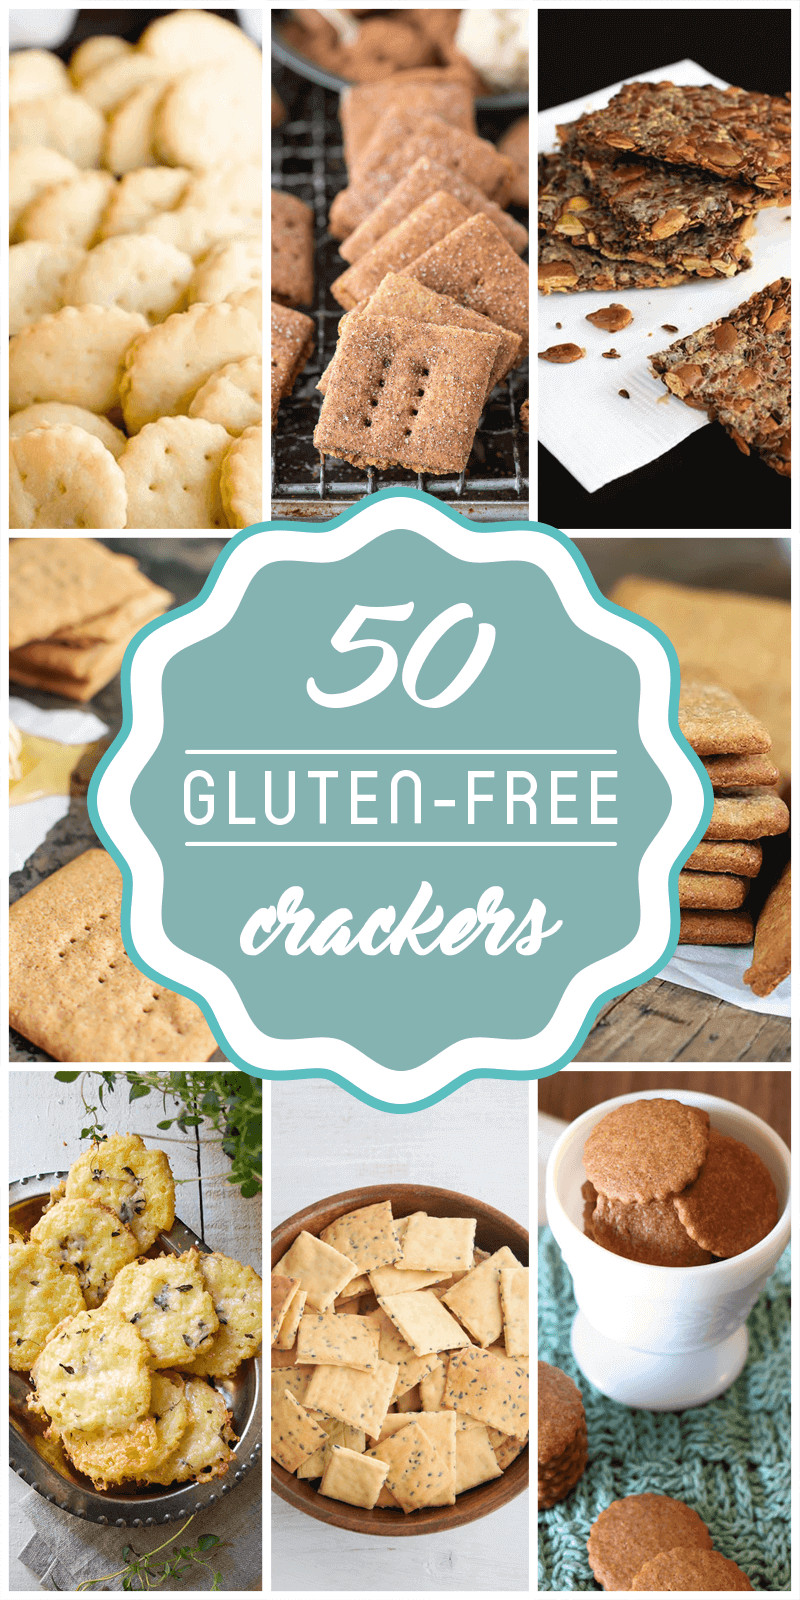 Milton'S Crackers Gluten Free
 50 Best Gluten Free Cracker Recipes for 2019 that Taste